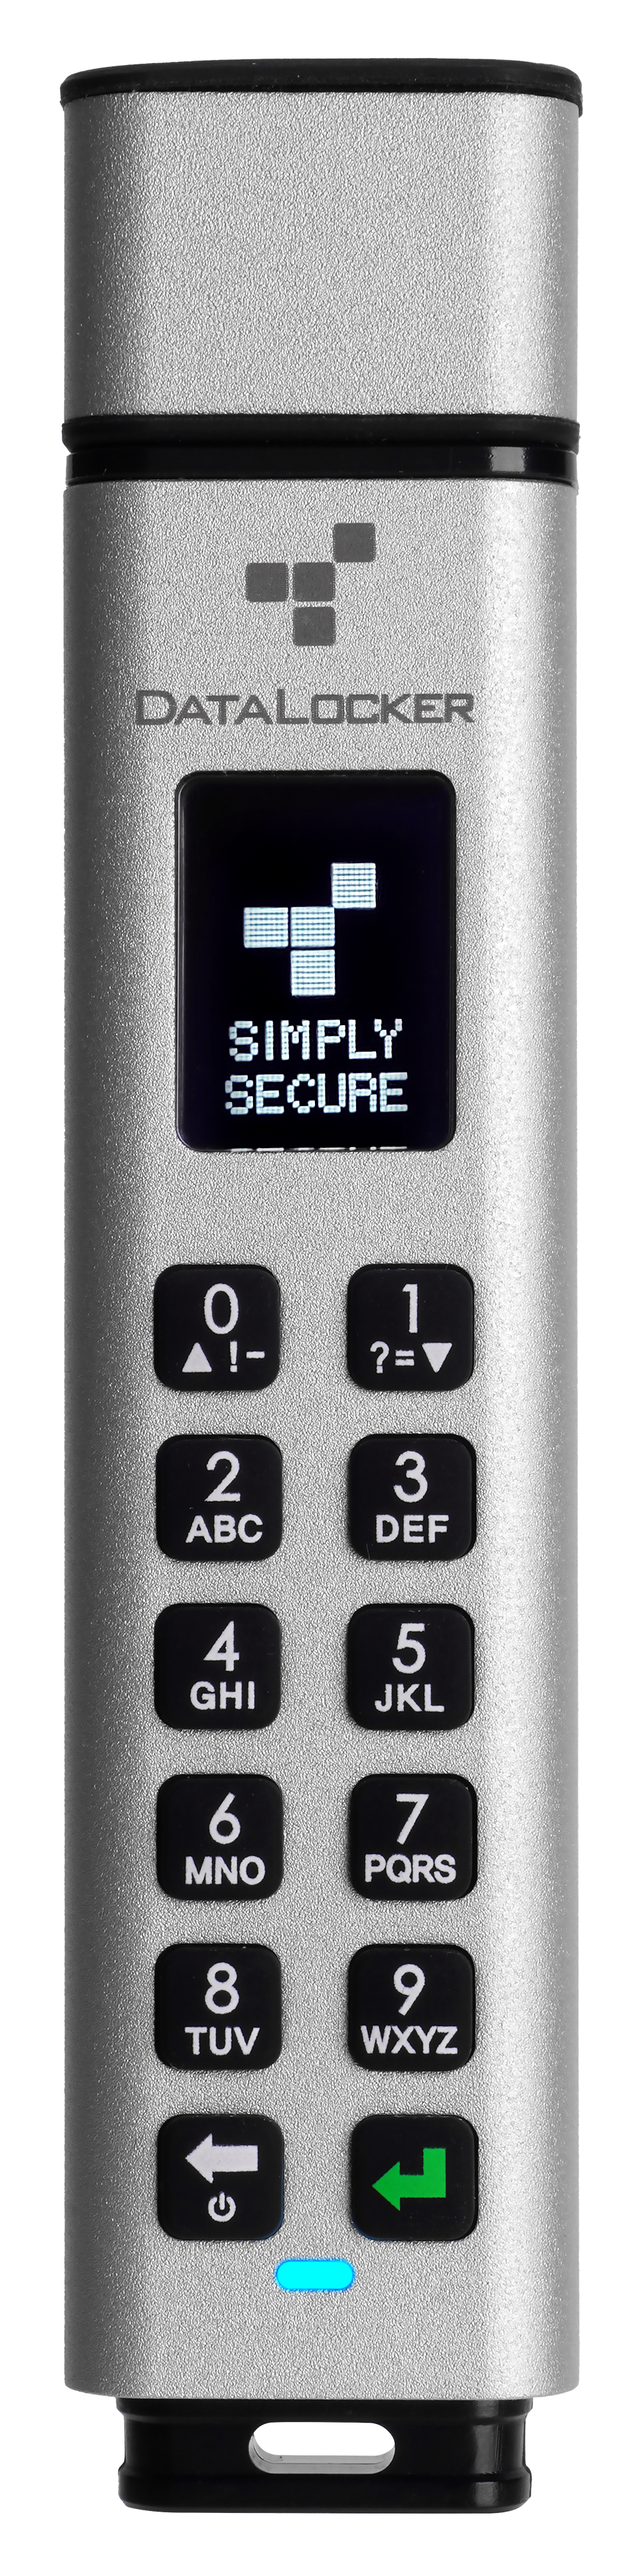 DataLocker Sentry K350 une clé USB cryptée, certifiée FIPS